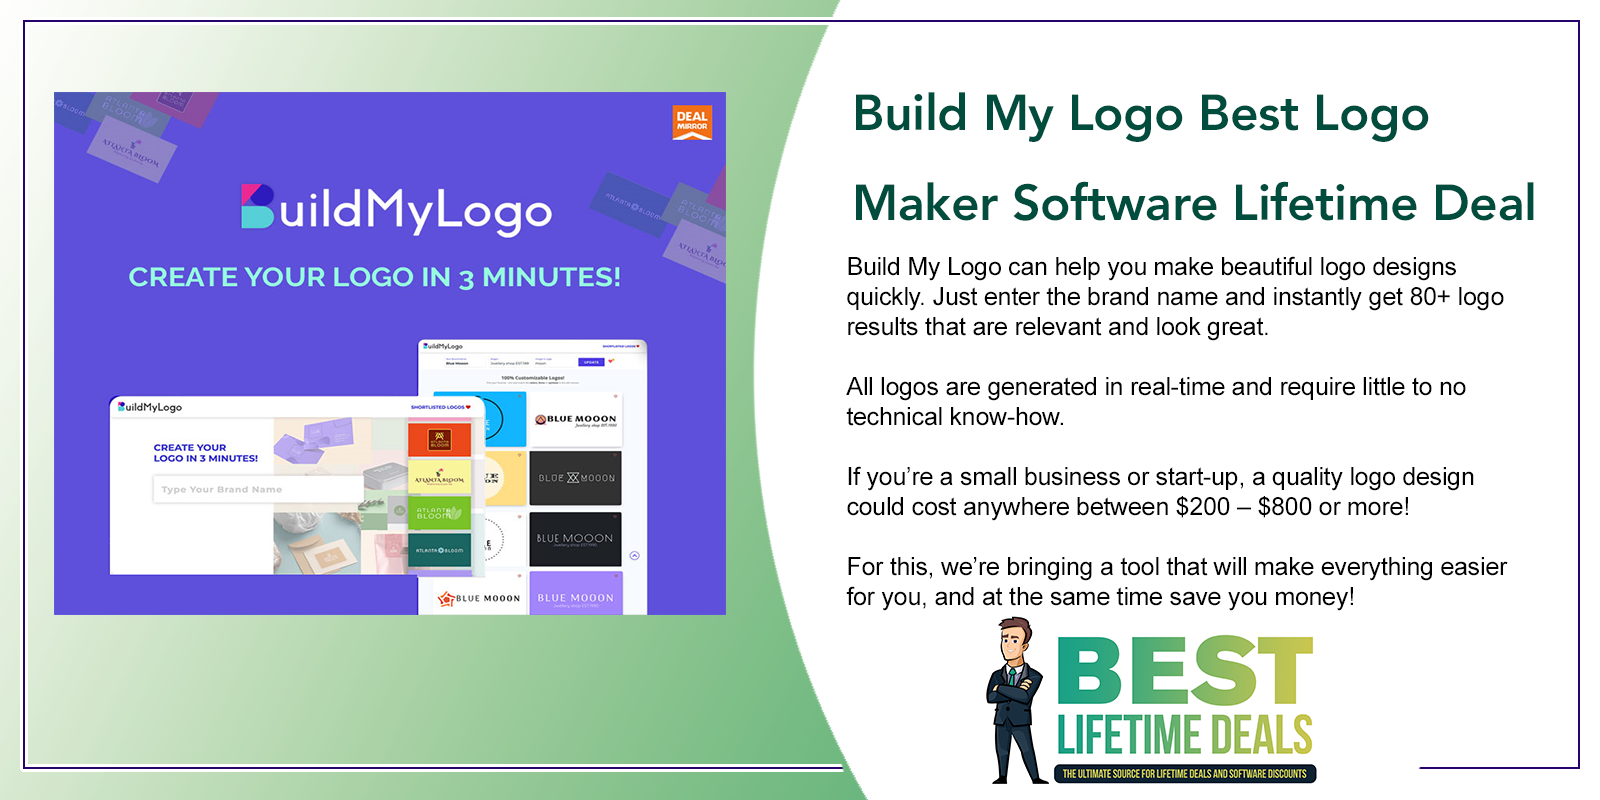 Build My Logo Best Logo Maker Software Lifetime Deal Featured Image